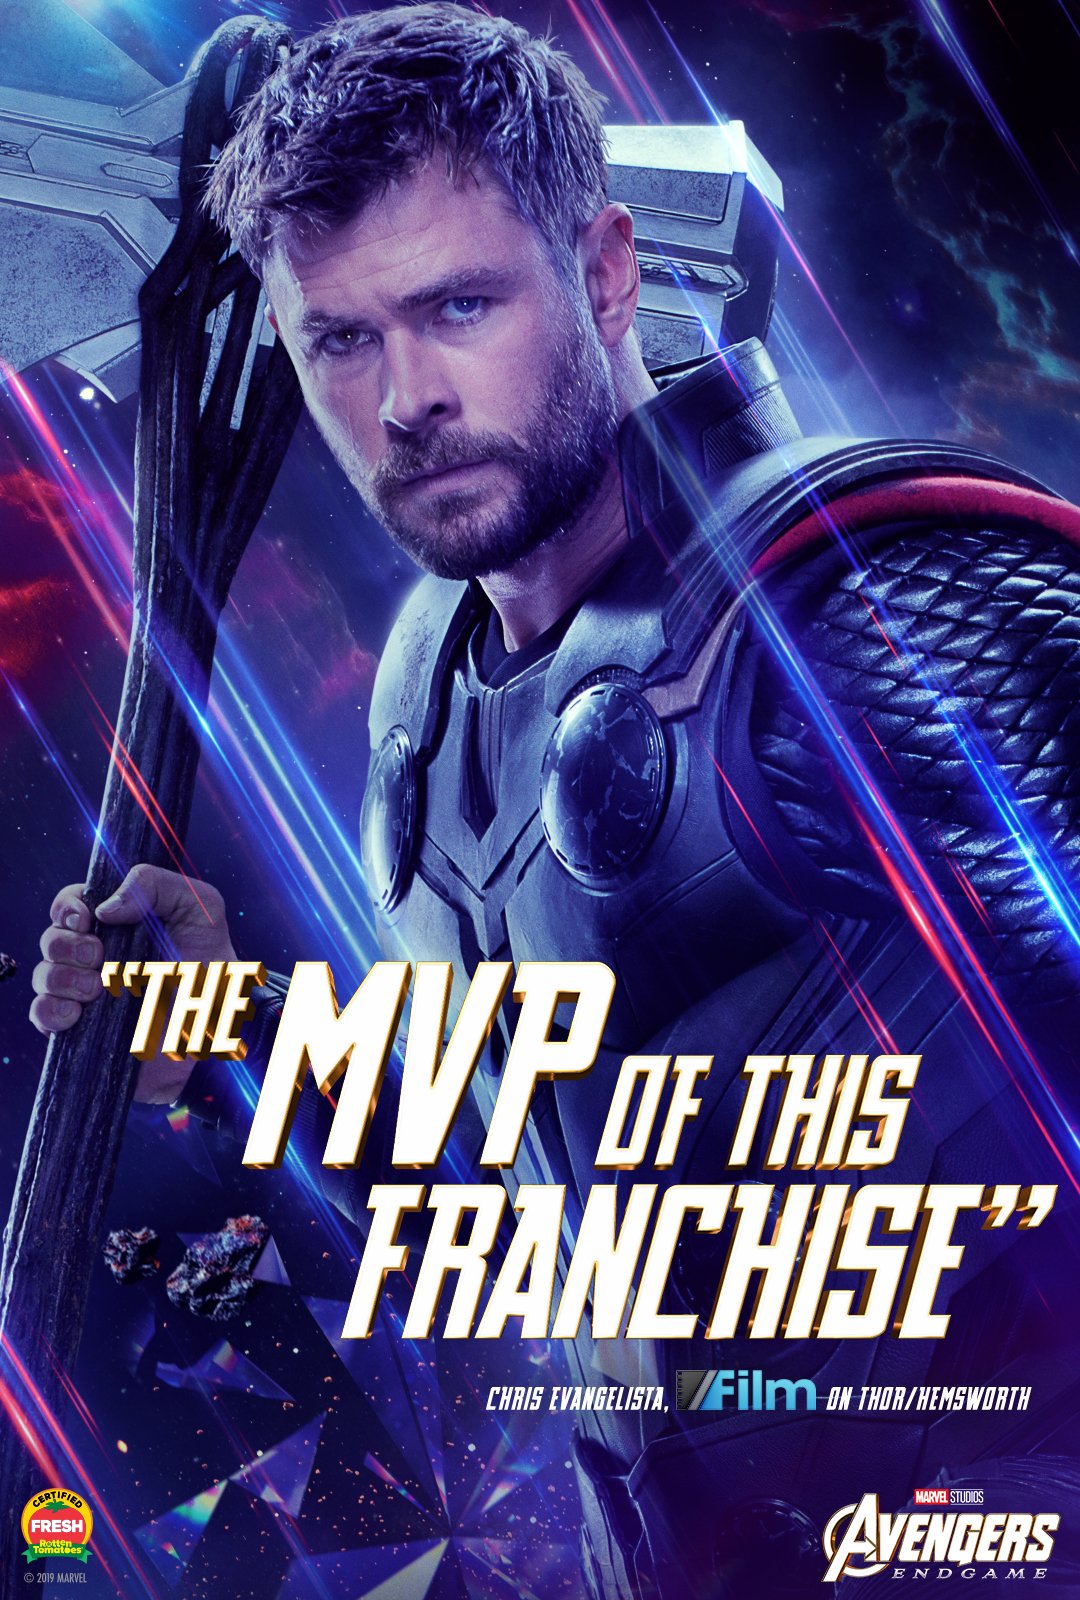 Avengers Infinity War Fandango Poster Wallpapers